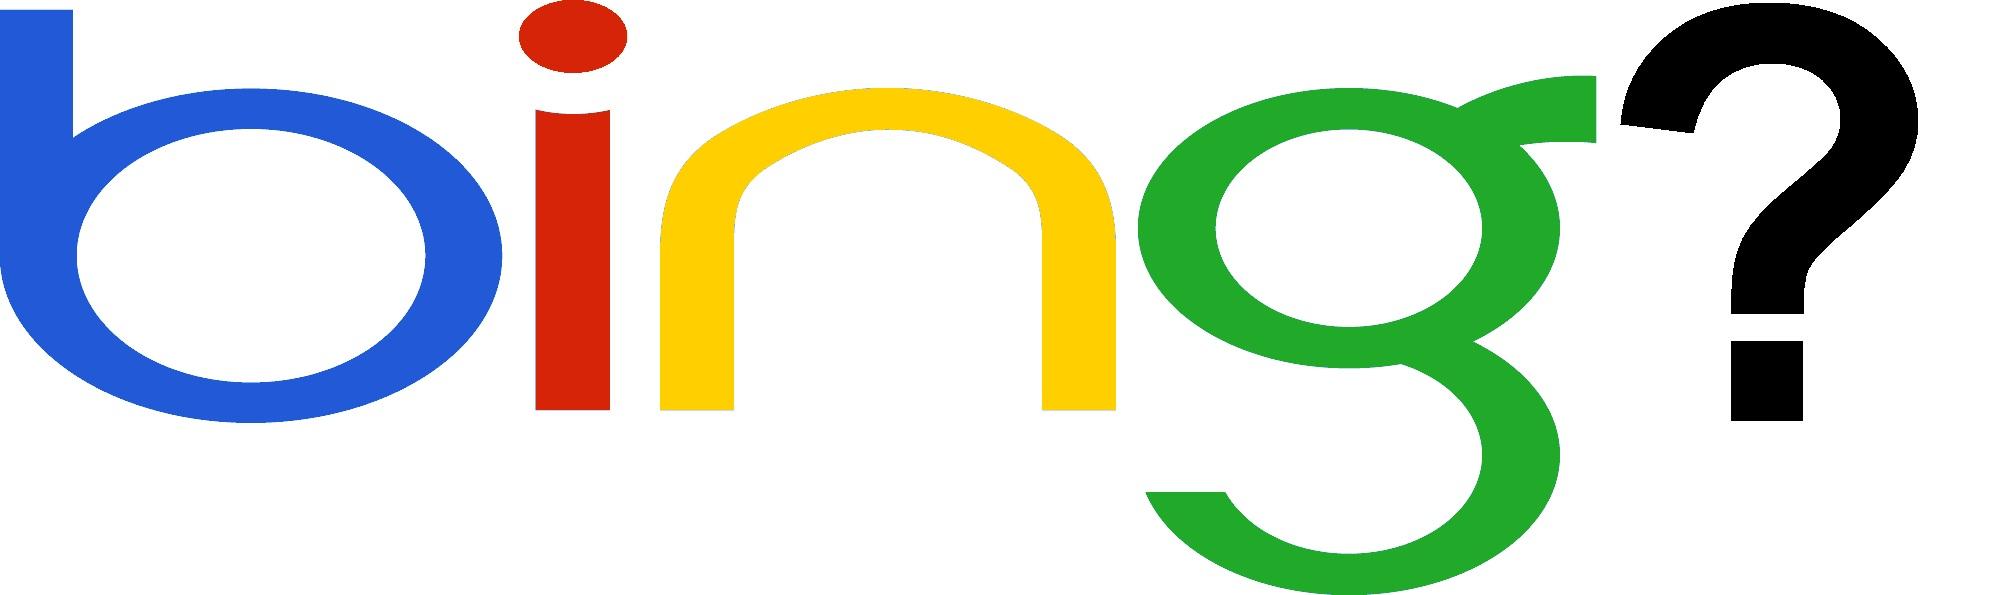 First Bing Logo - Intrepid explorer arrives at Google via Bing - Honi Soit